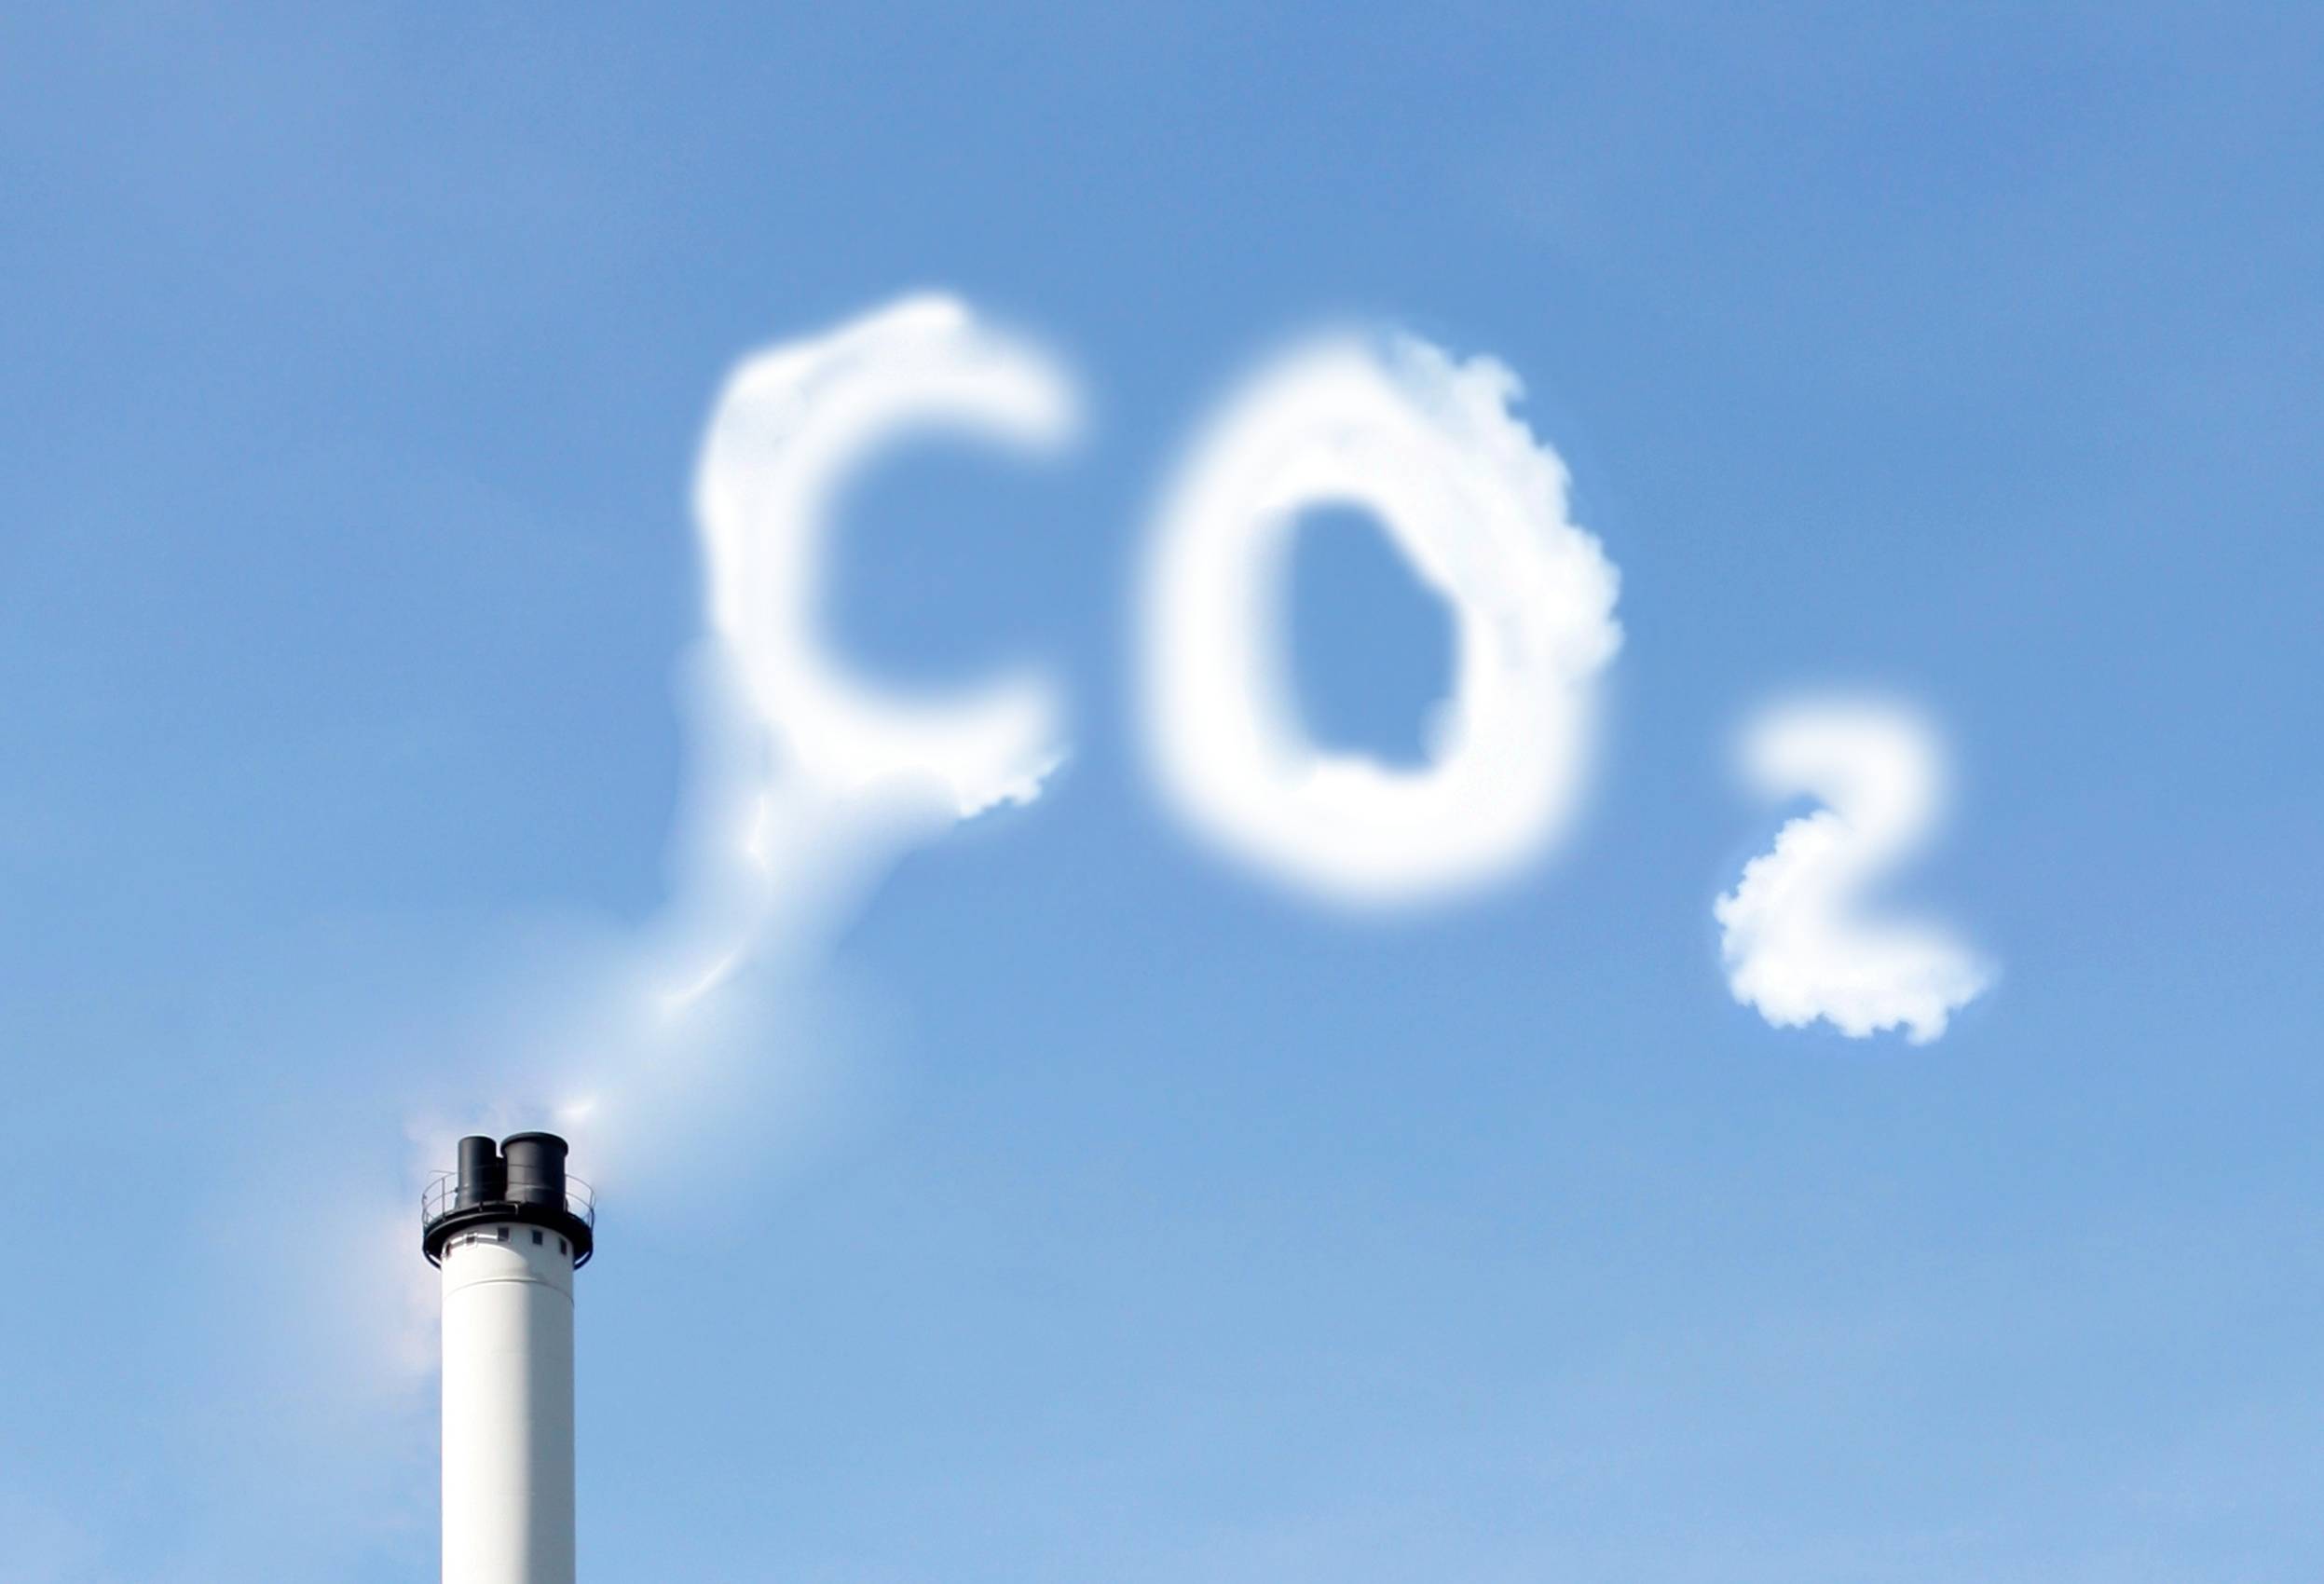 emisiile de carbon